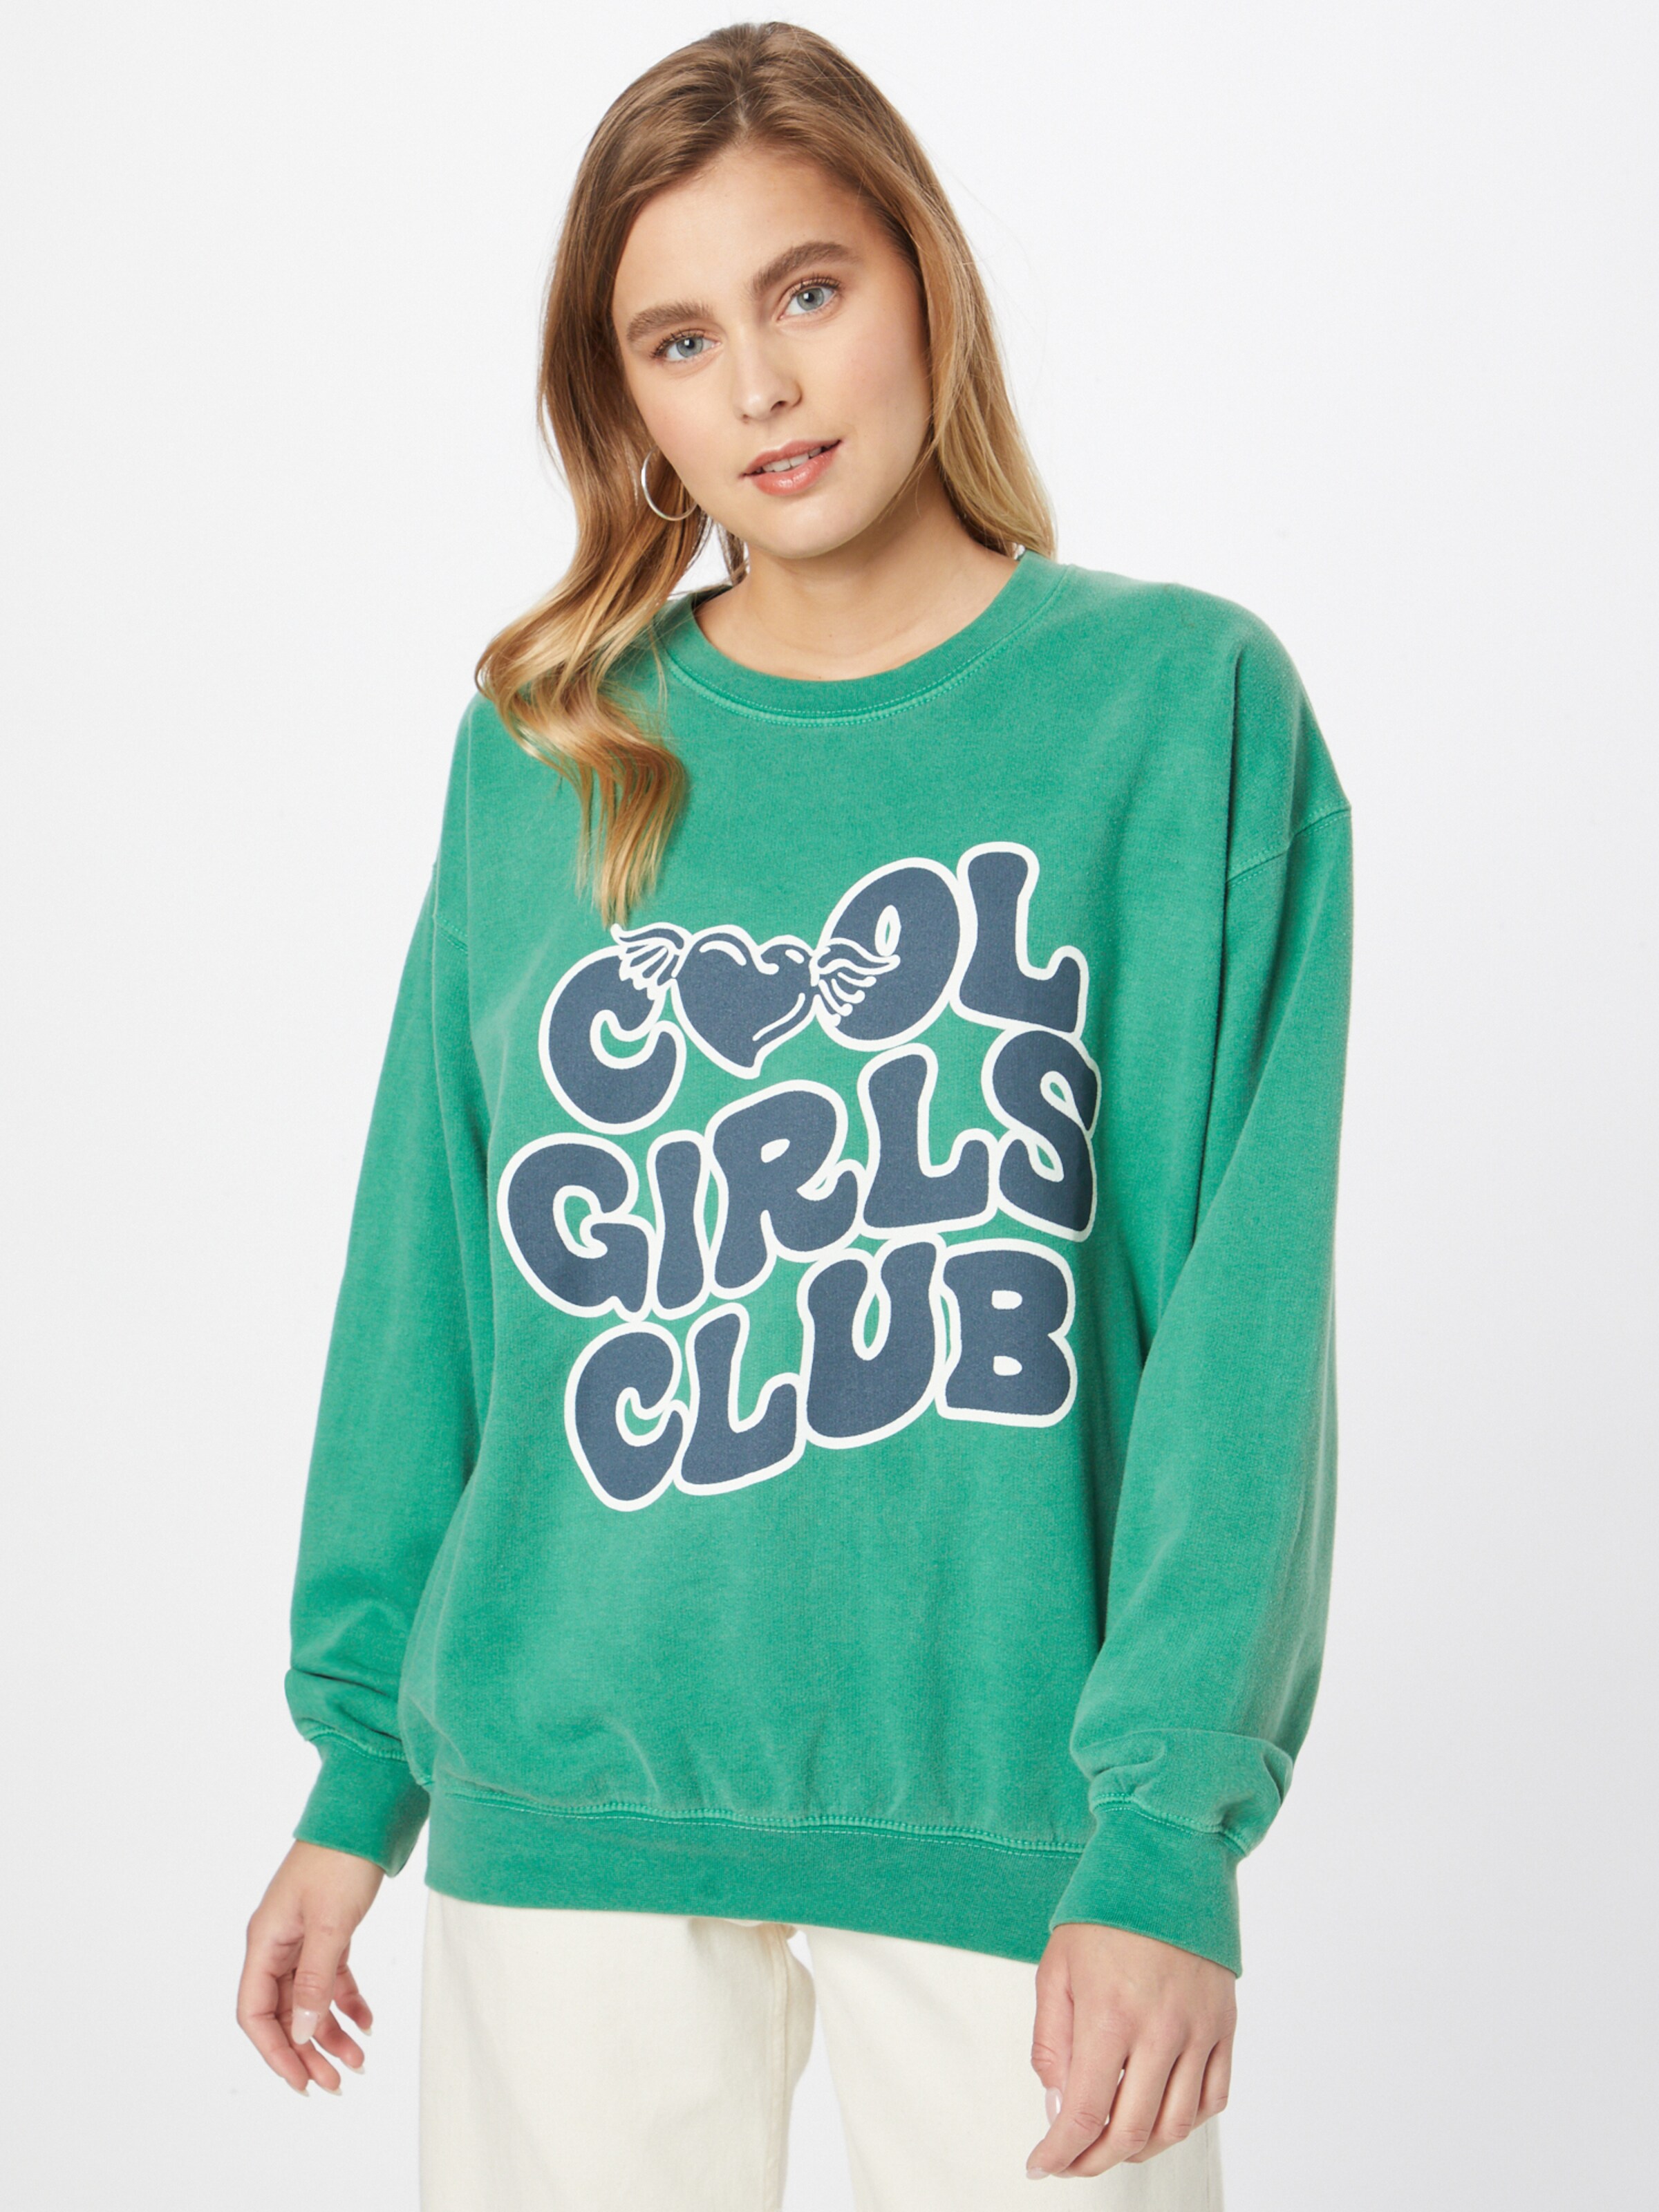 Sweats Sweat-shirt 'Cool Girls Club' Nasty Gal en Jade, Vert Foncé 